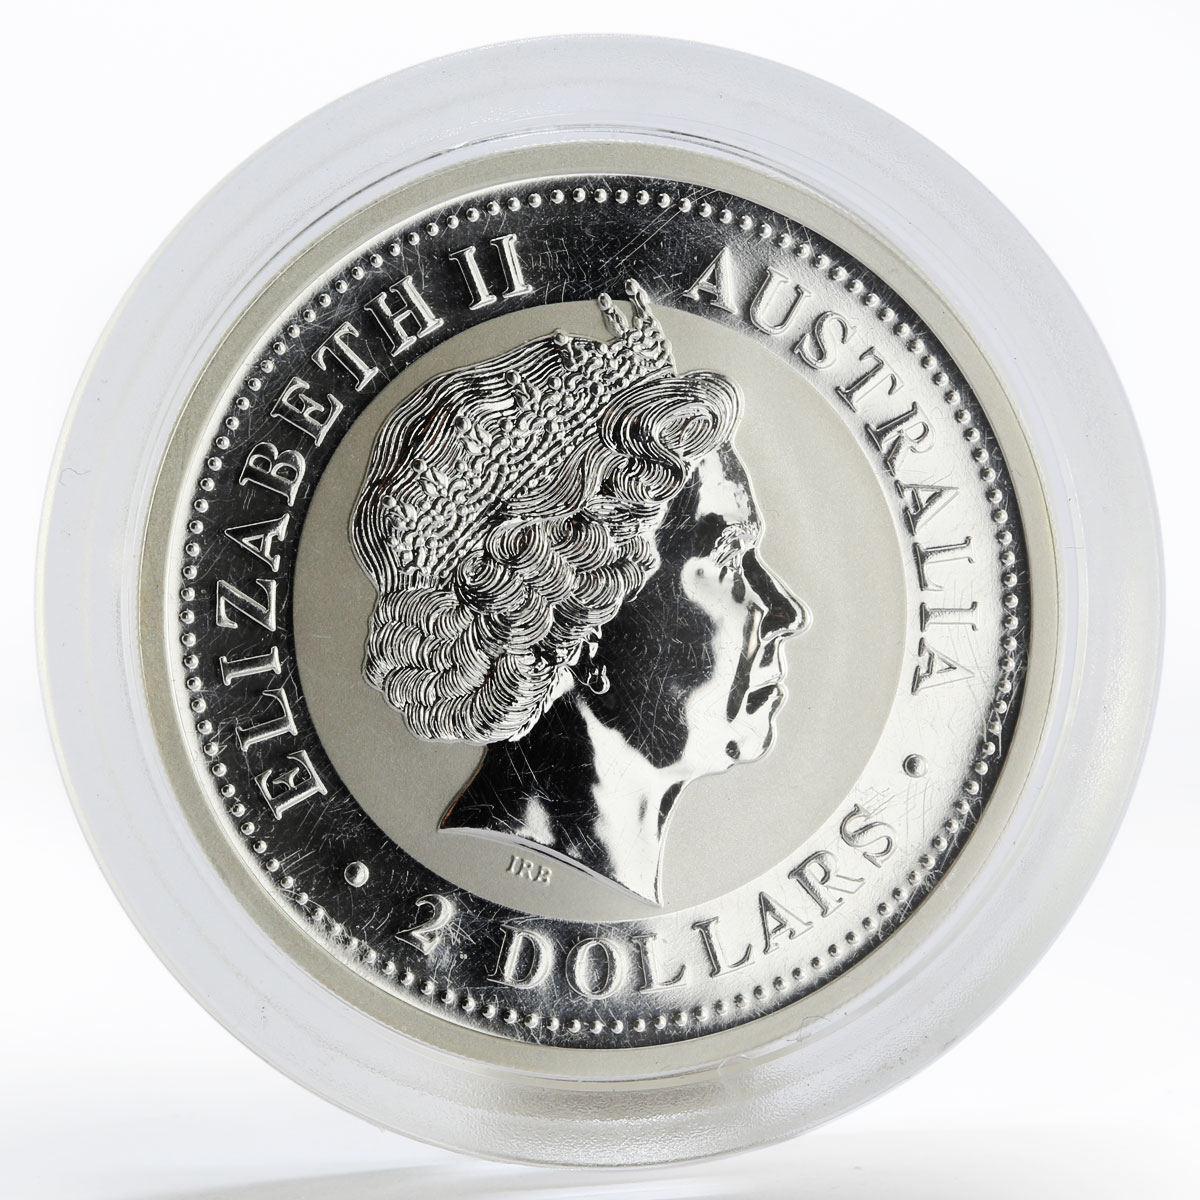 Australia 2 dollars Kookaburra birds fauna silver coin 2oz 2006